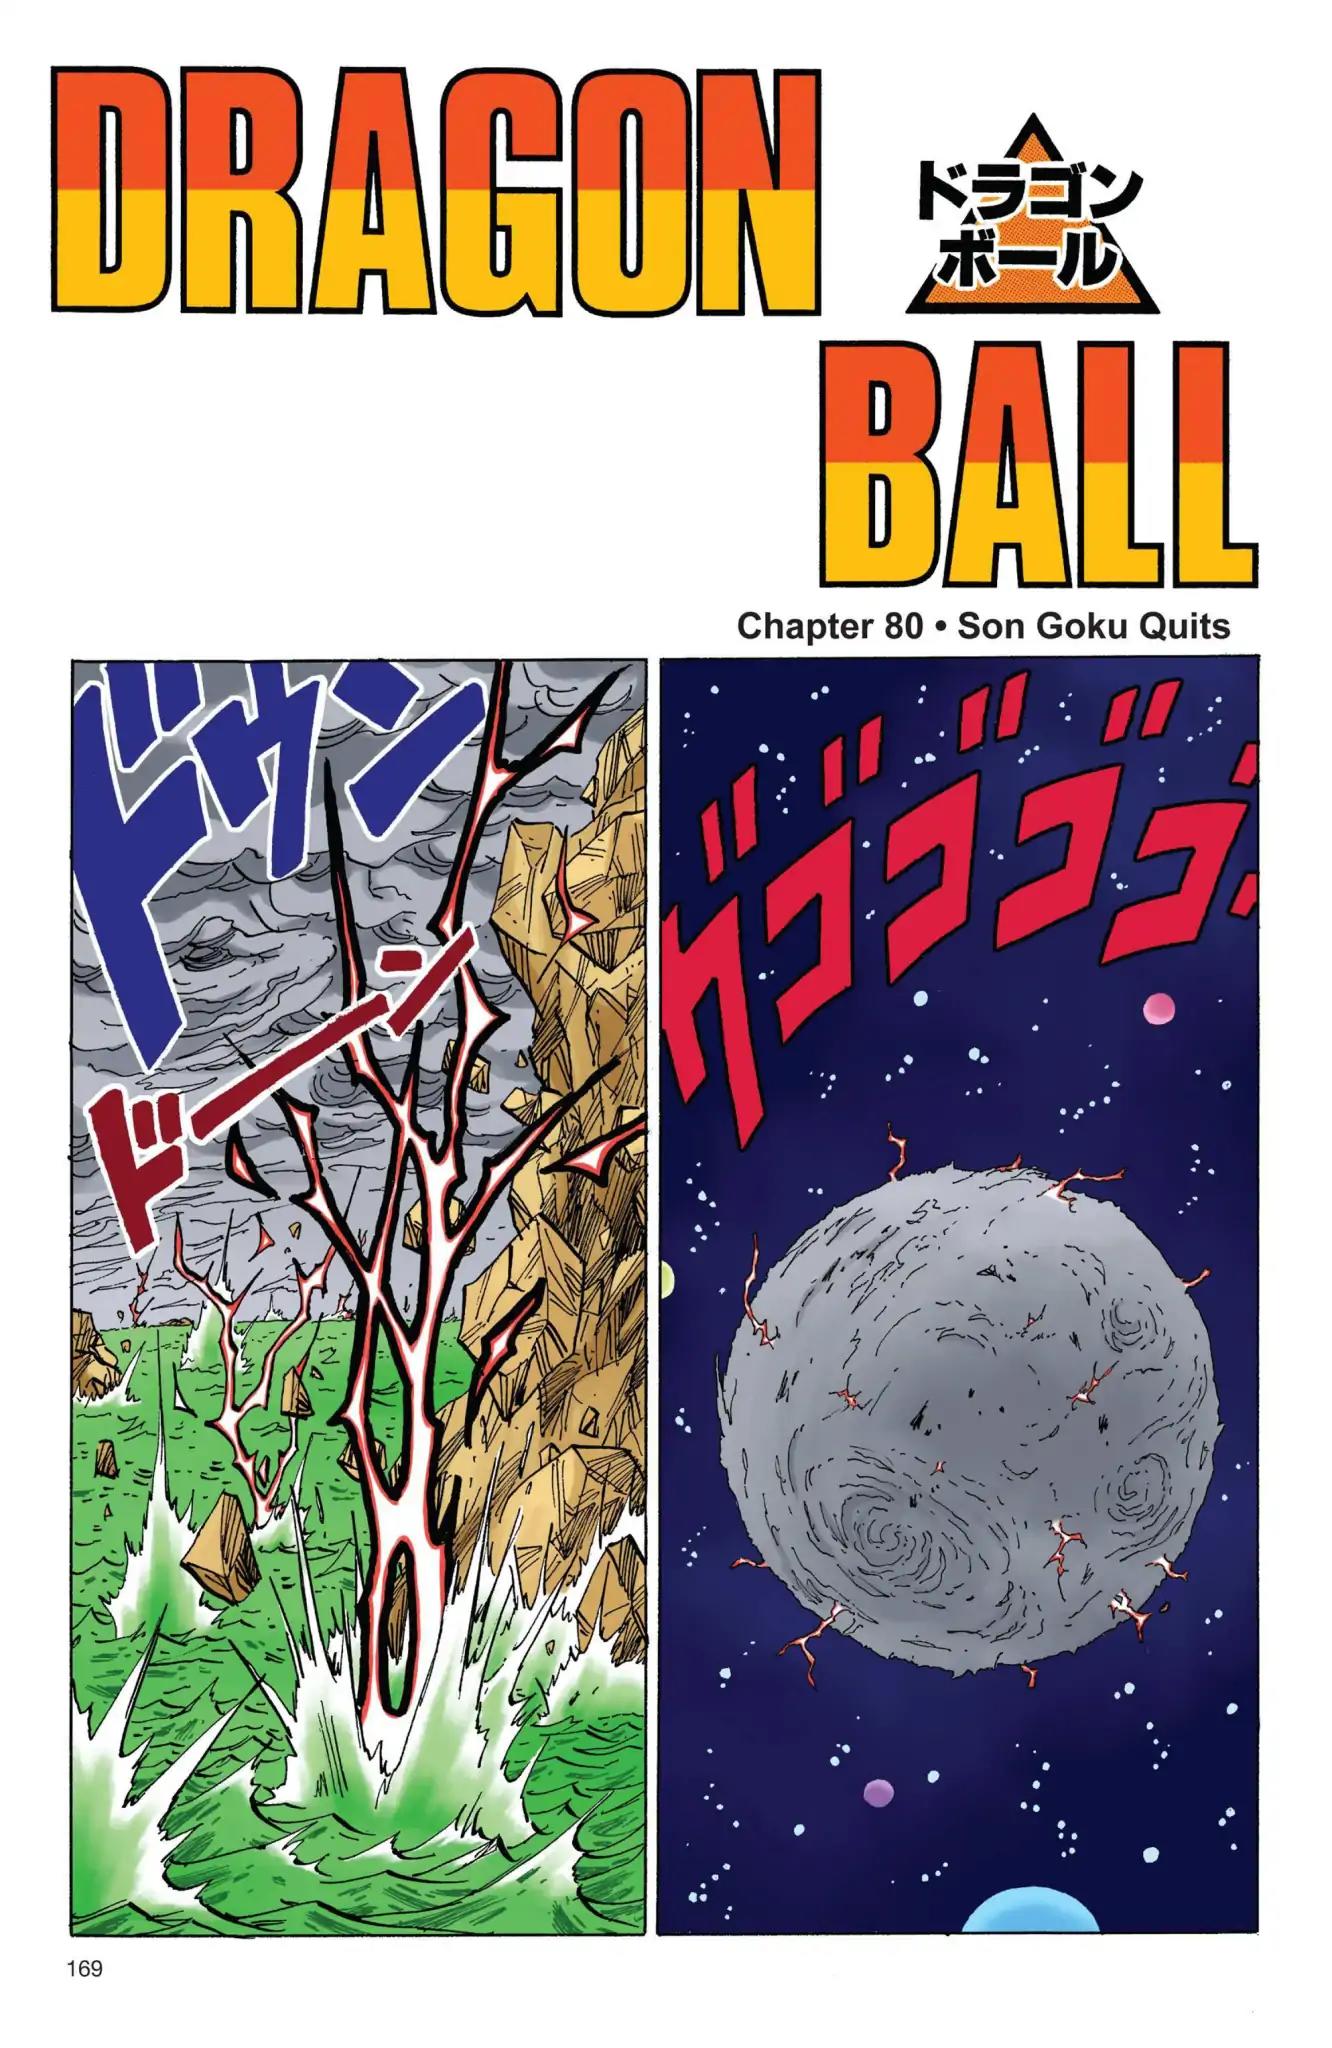 Dragon Ball Full Color Freeza Arc Vol.5 Chapter 080: